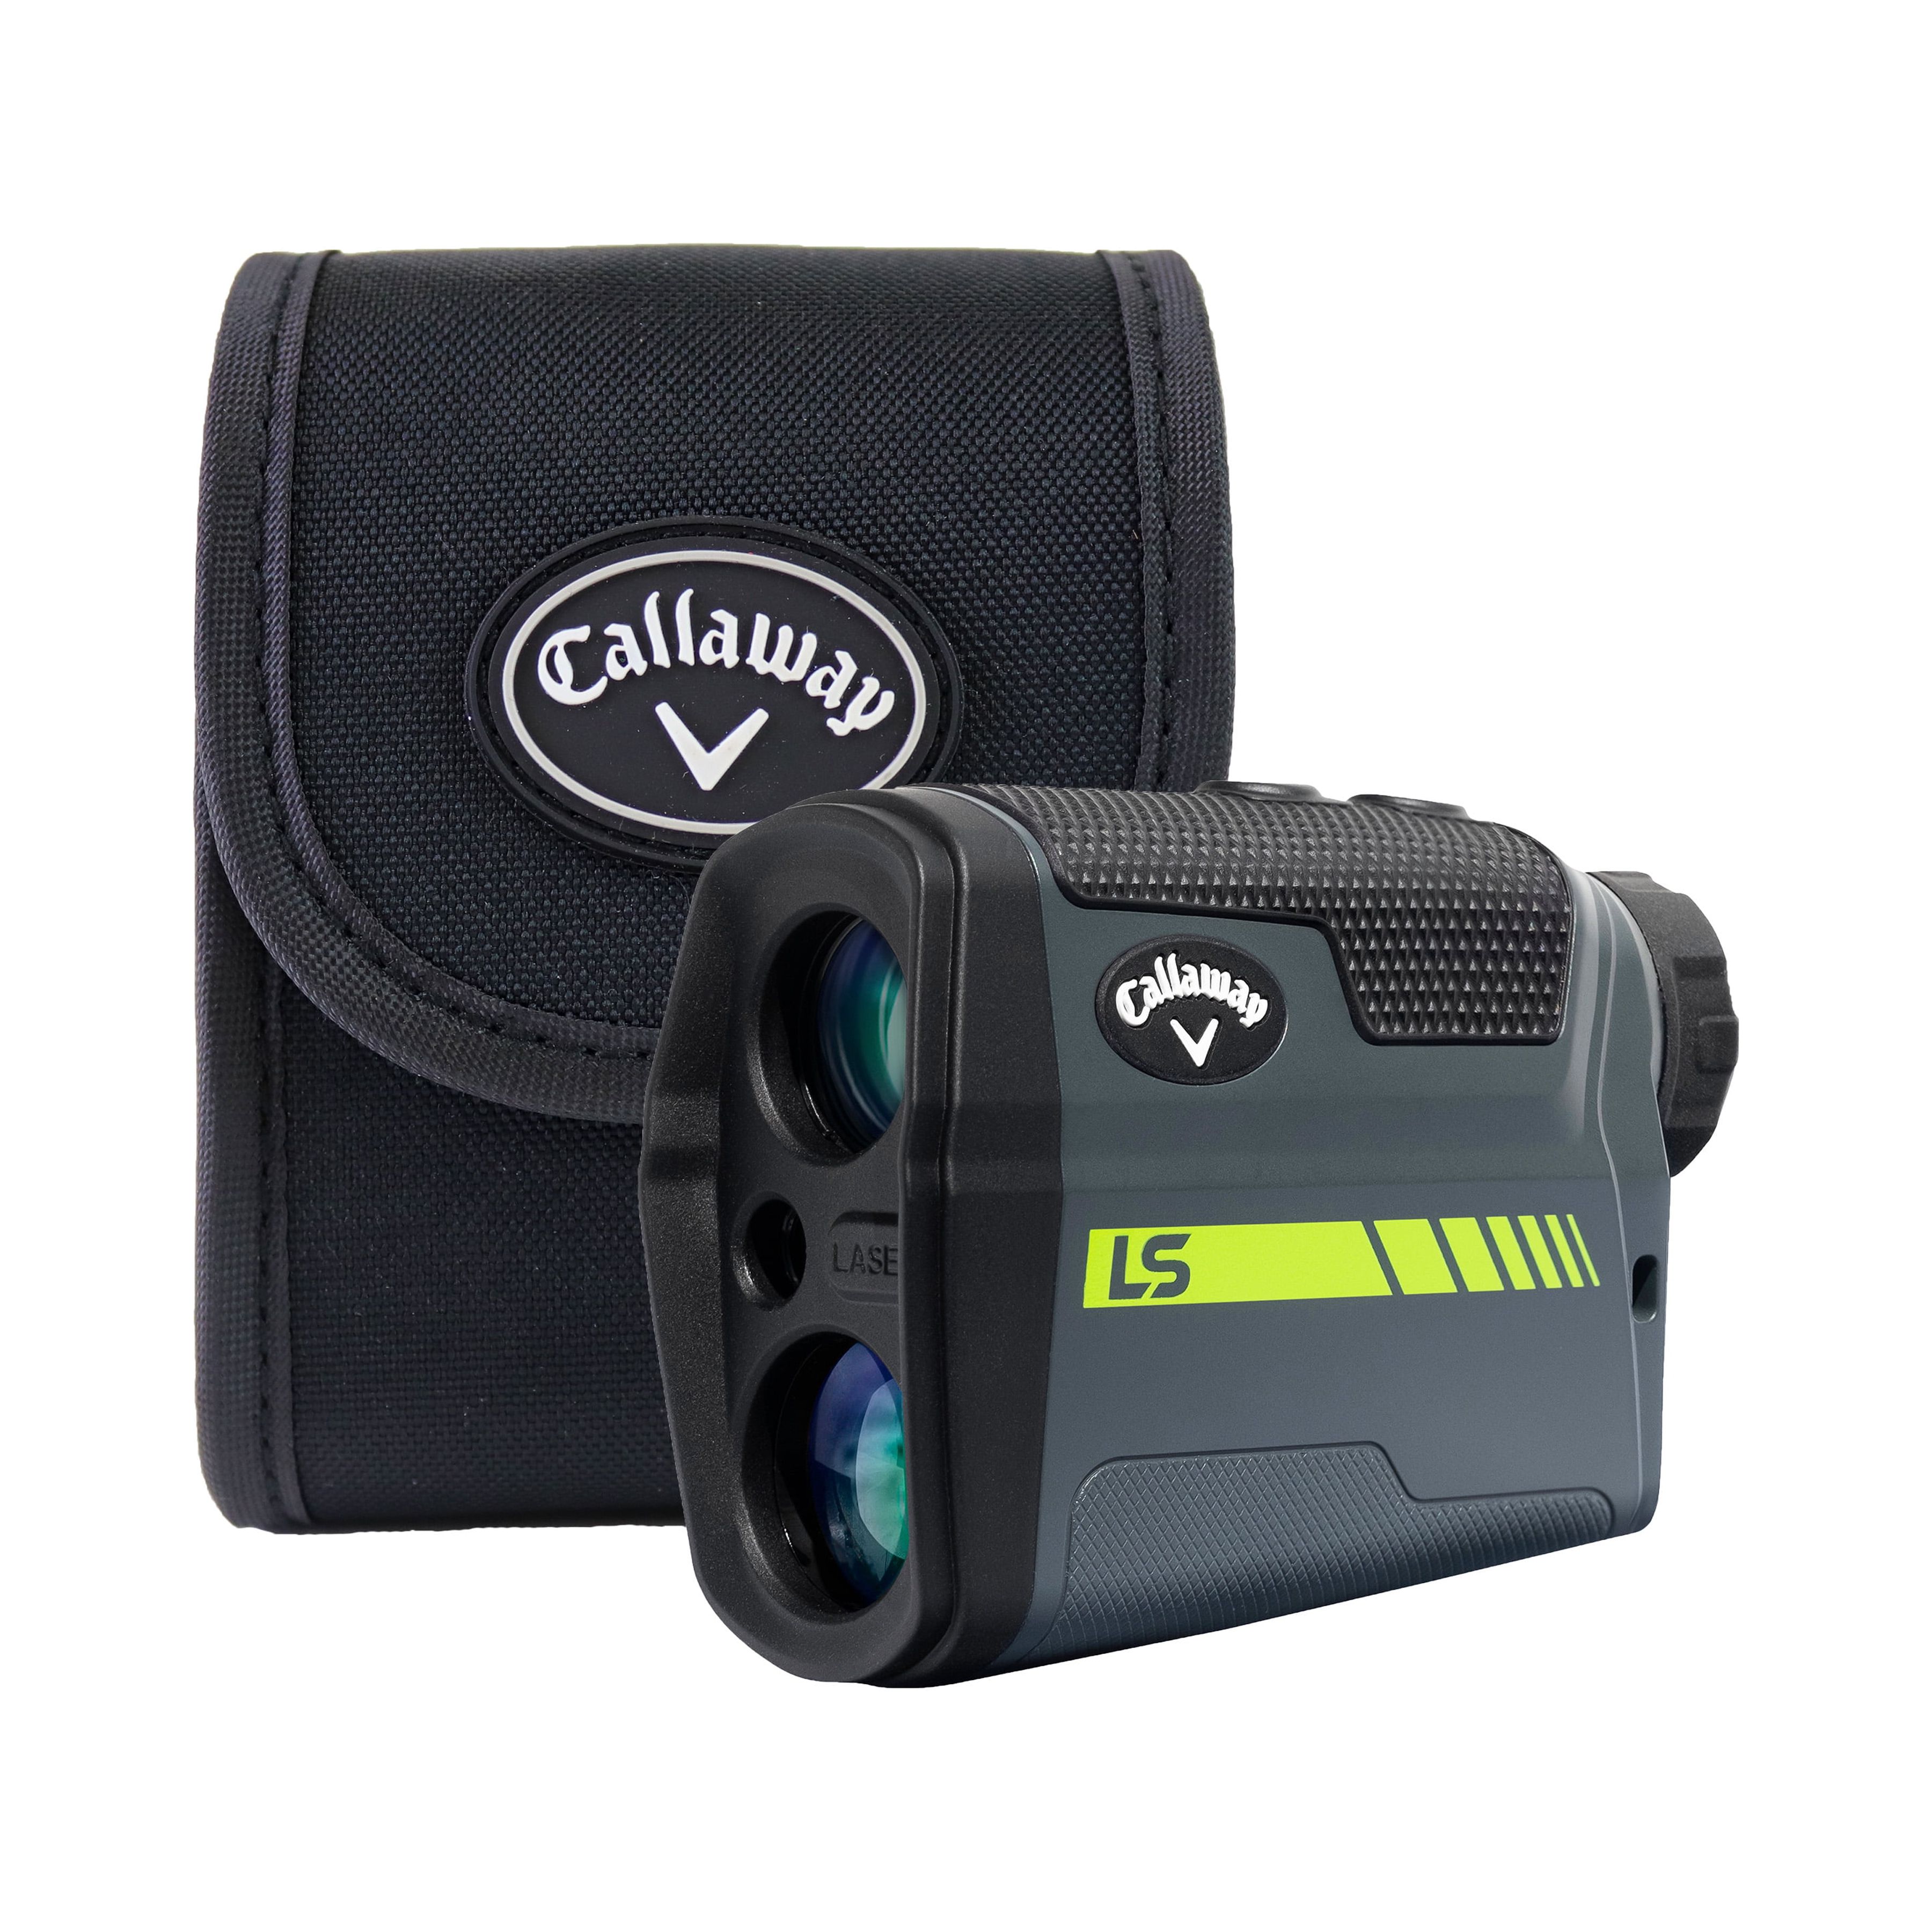 Callaway LS Slope Golf Laser Rangefinder, with Pulse Confirmation - image 2 of 10